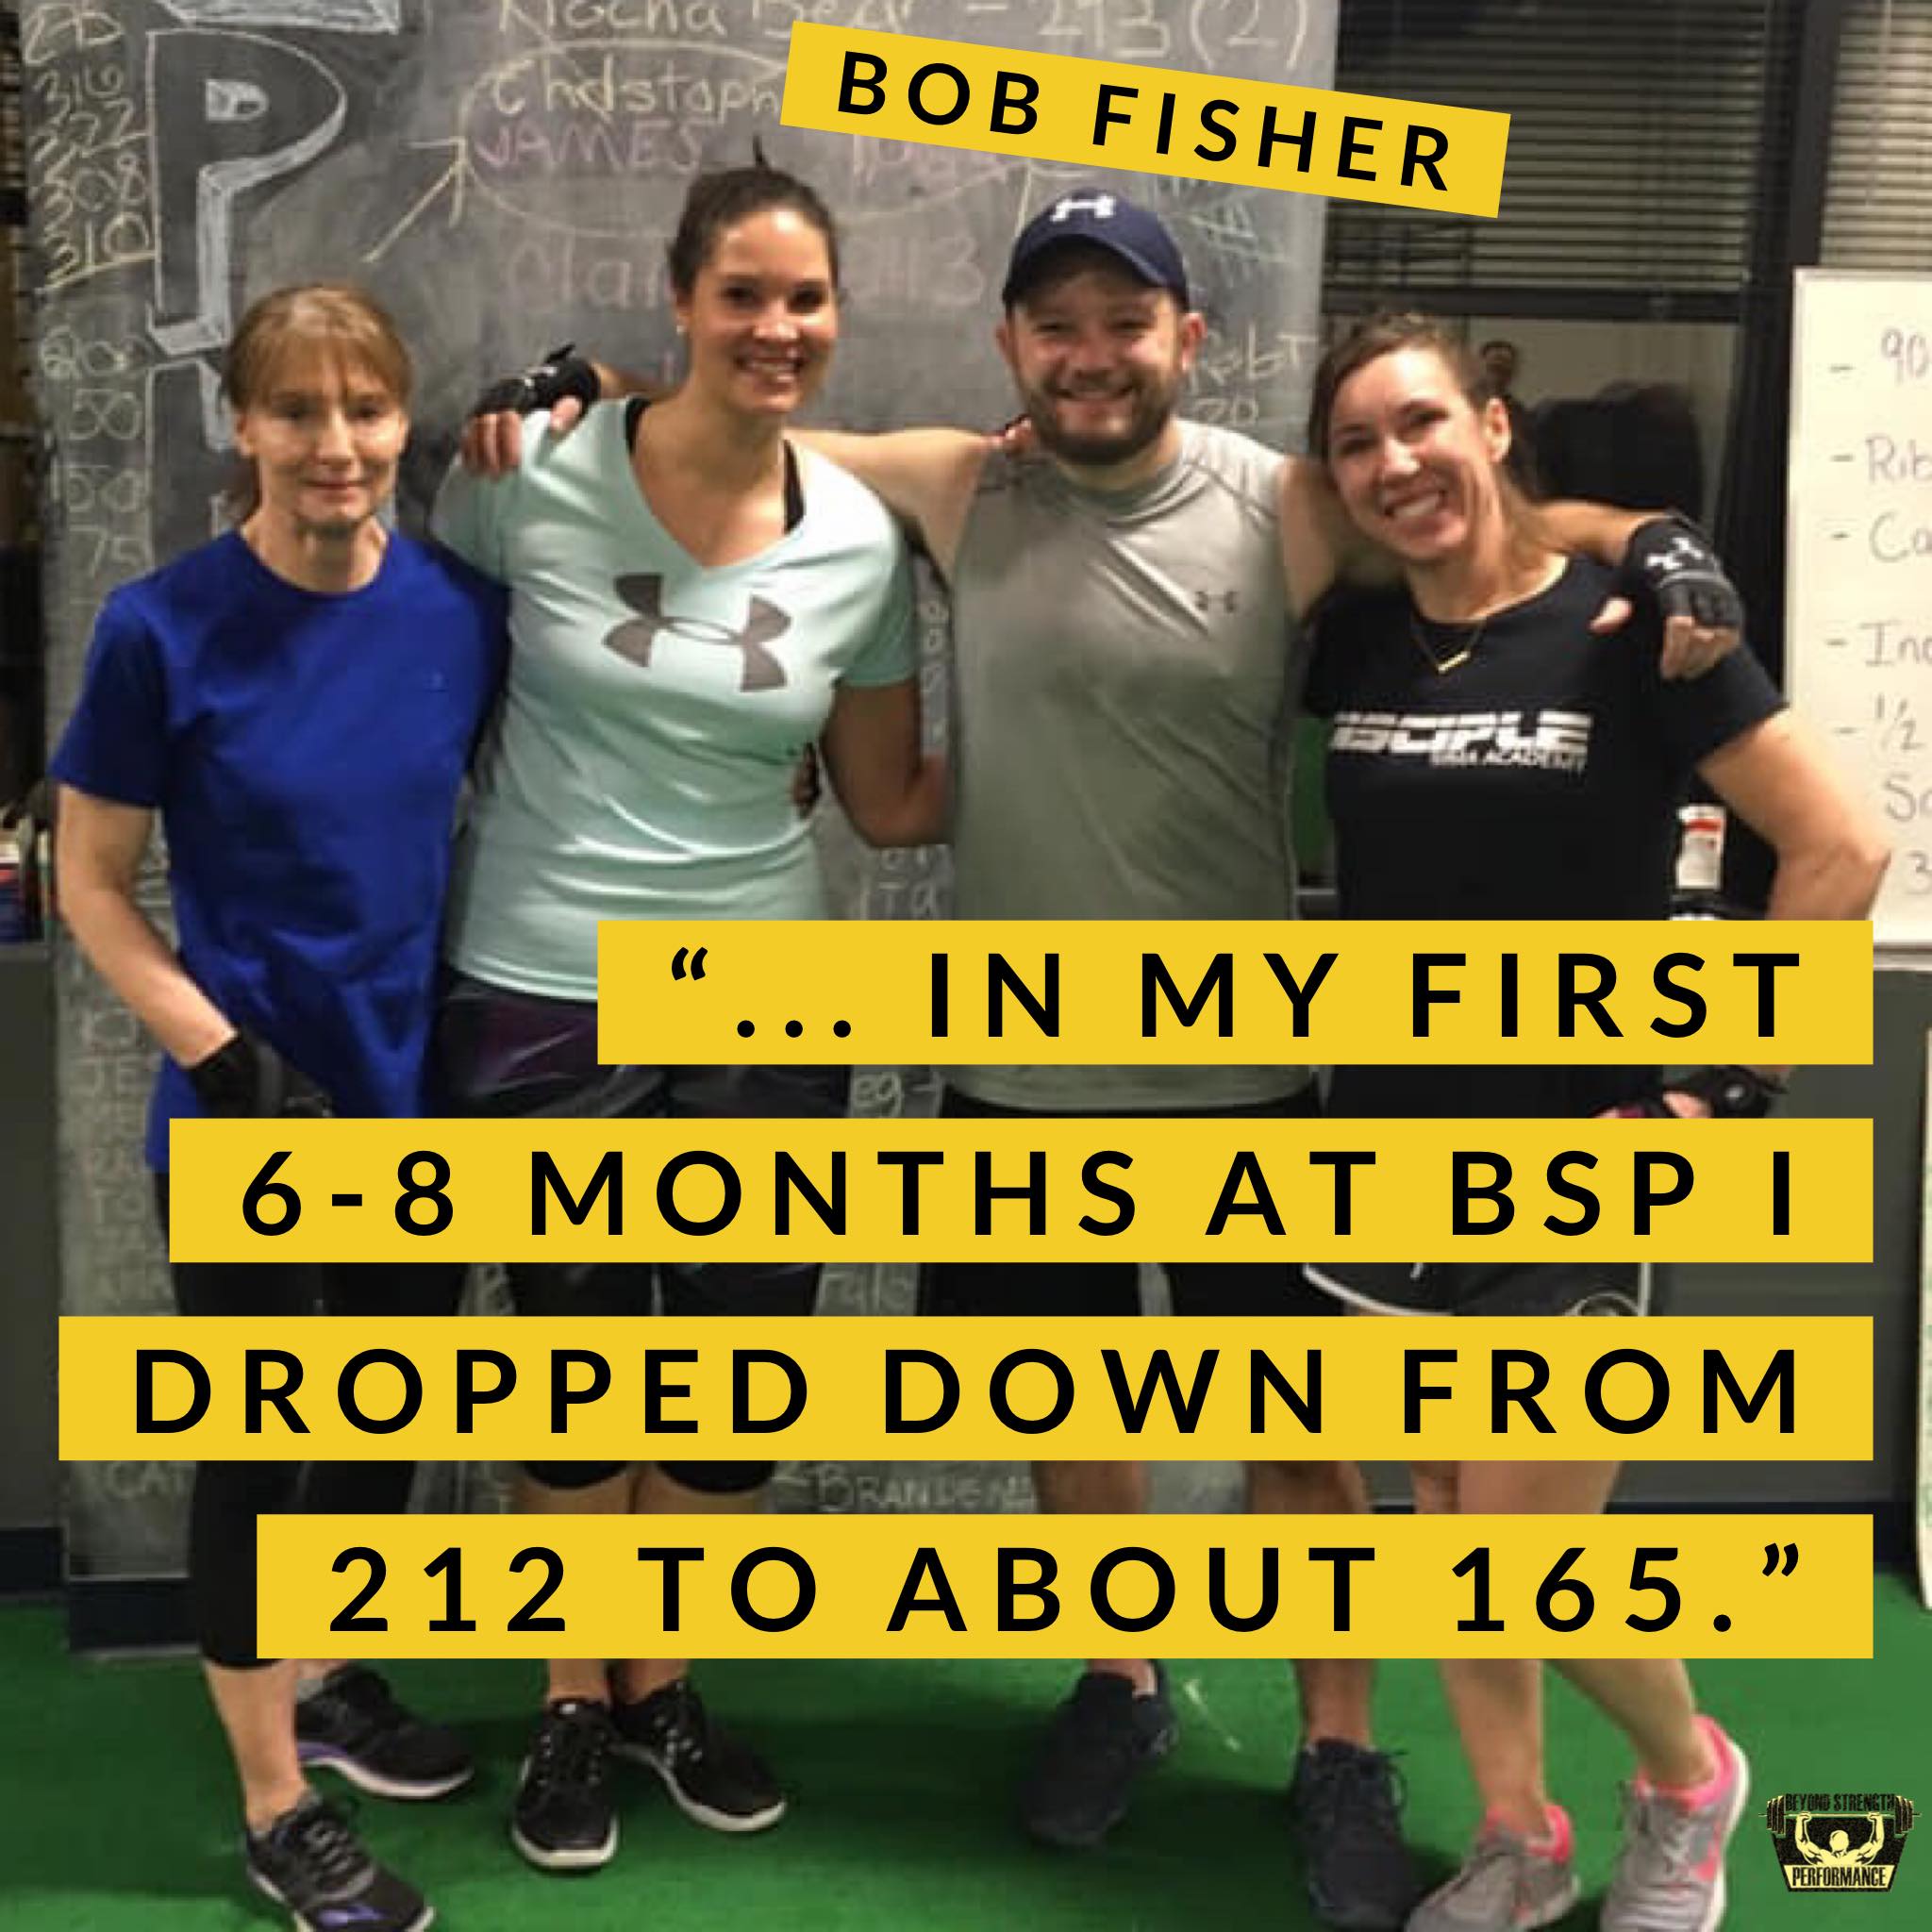 Bob lost almost 50lbs in 6-8 months at BSP NOVA in Sterling, Virginia